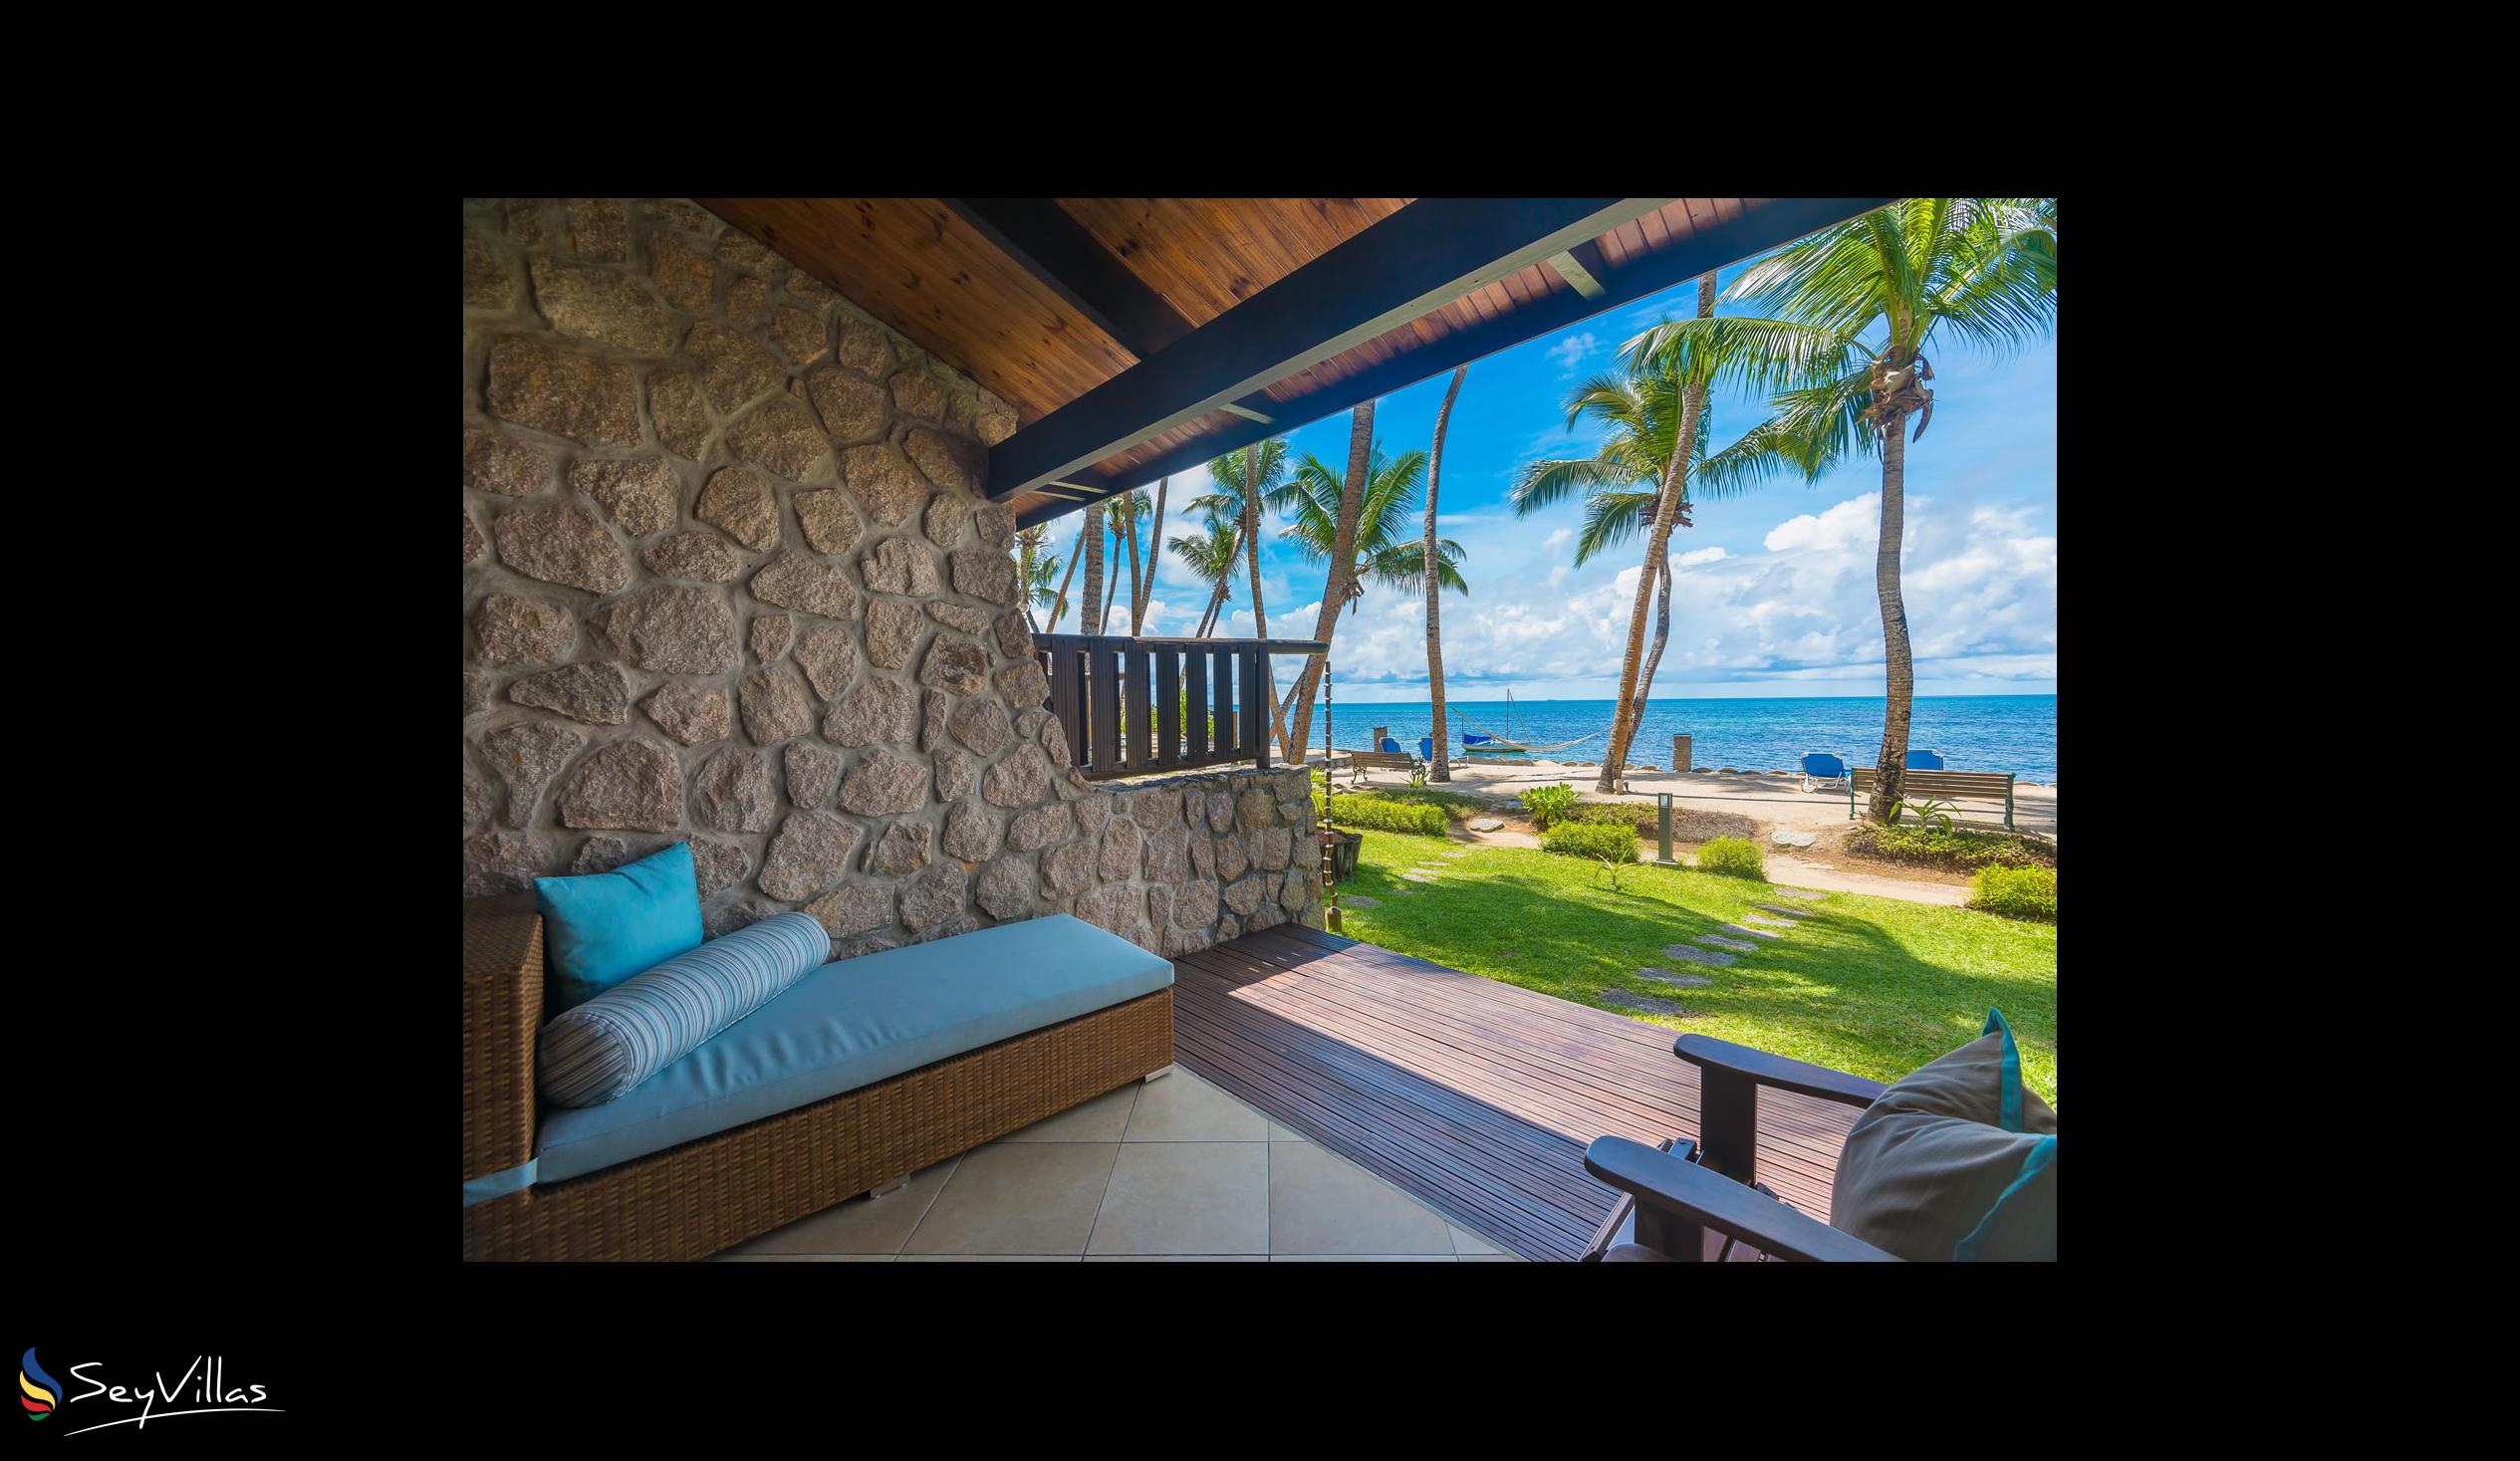 Photo 64: Coco de Mer & Black Parrot Suites - Superior - Praslin (Seychelles)